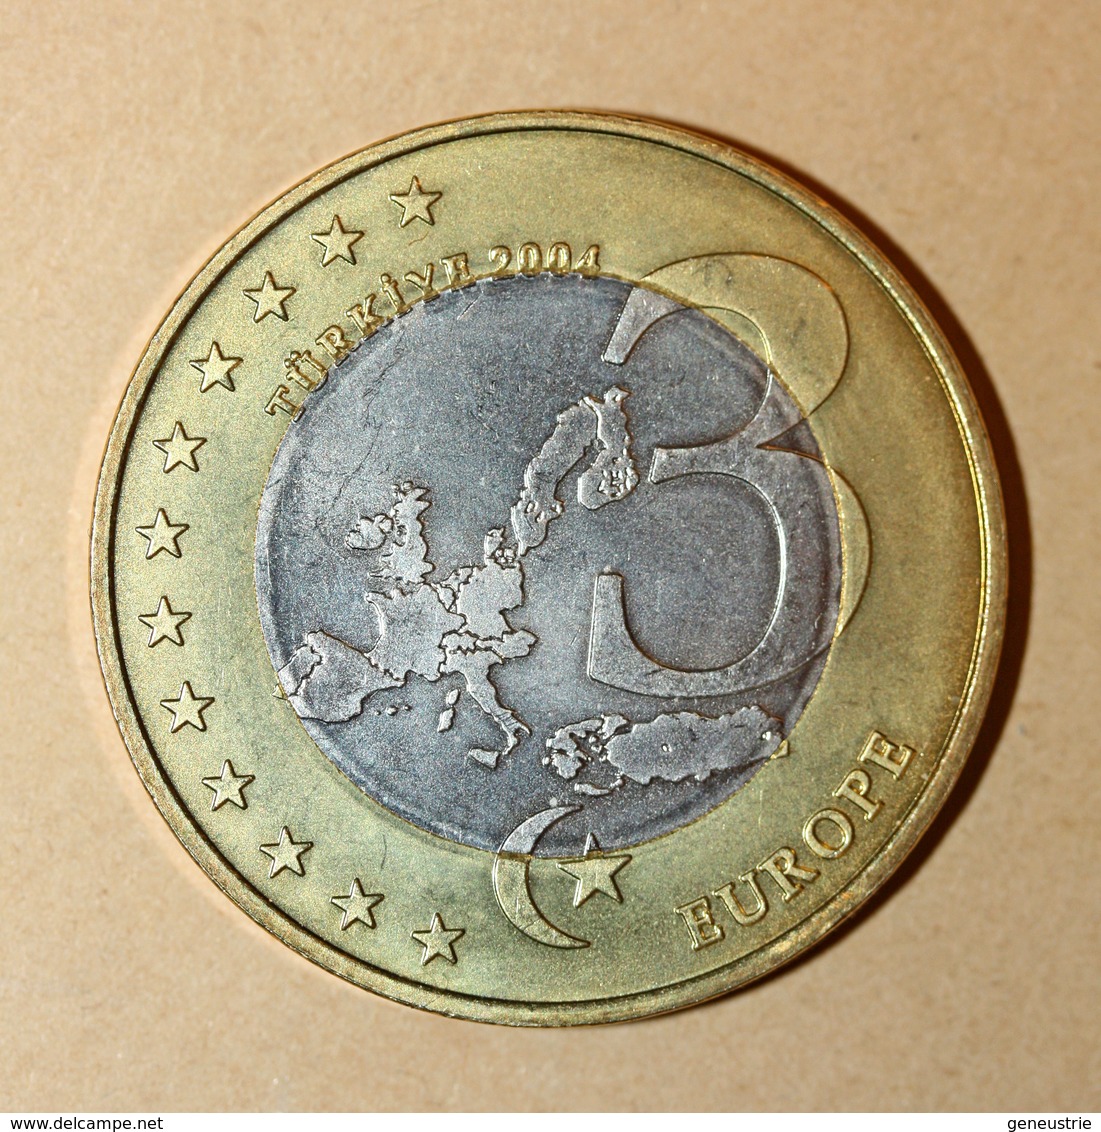 Monnaie Jeton De 3 Euros ? "Turkiye 2004 / Mustafa Kemal Ataturk 1881-1938" - Privatentwürfe